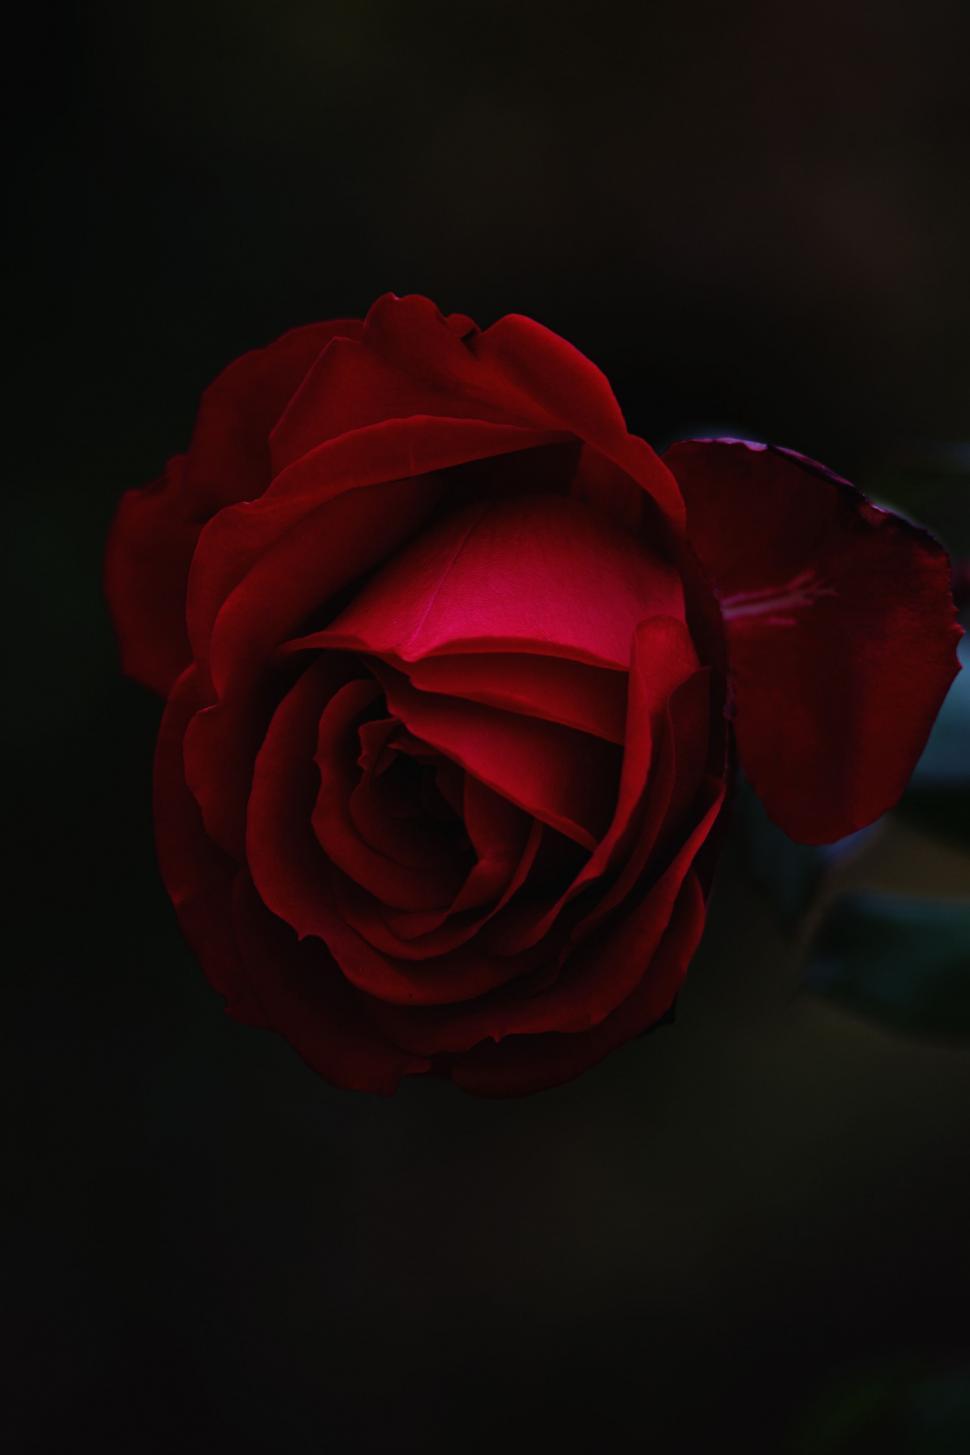 Free Image of Single Red Rose on Black Background 